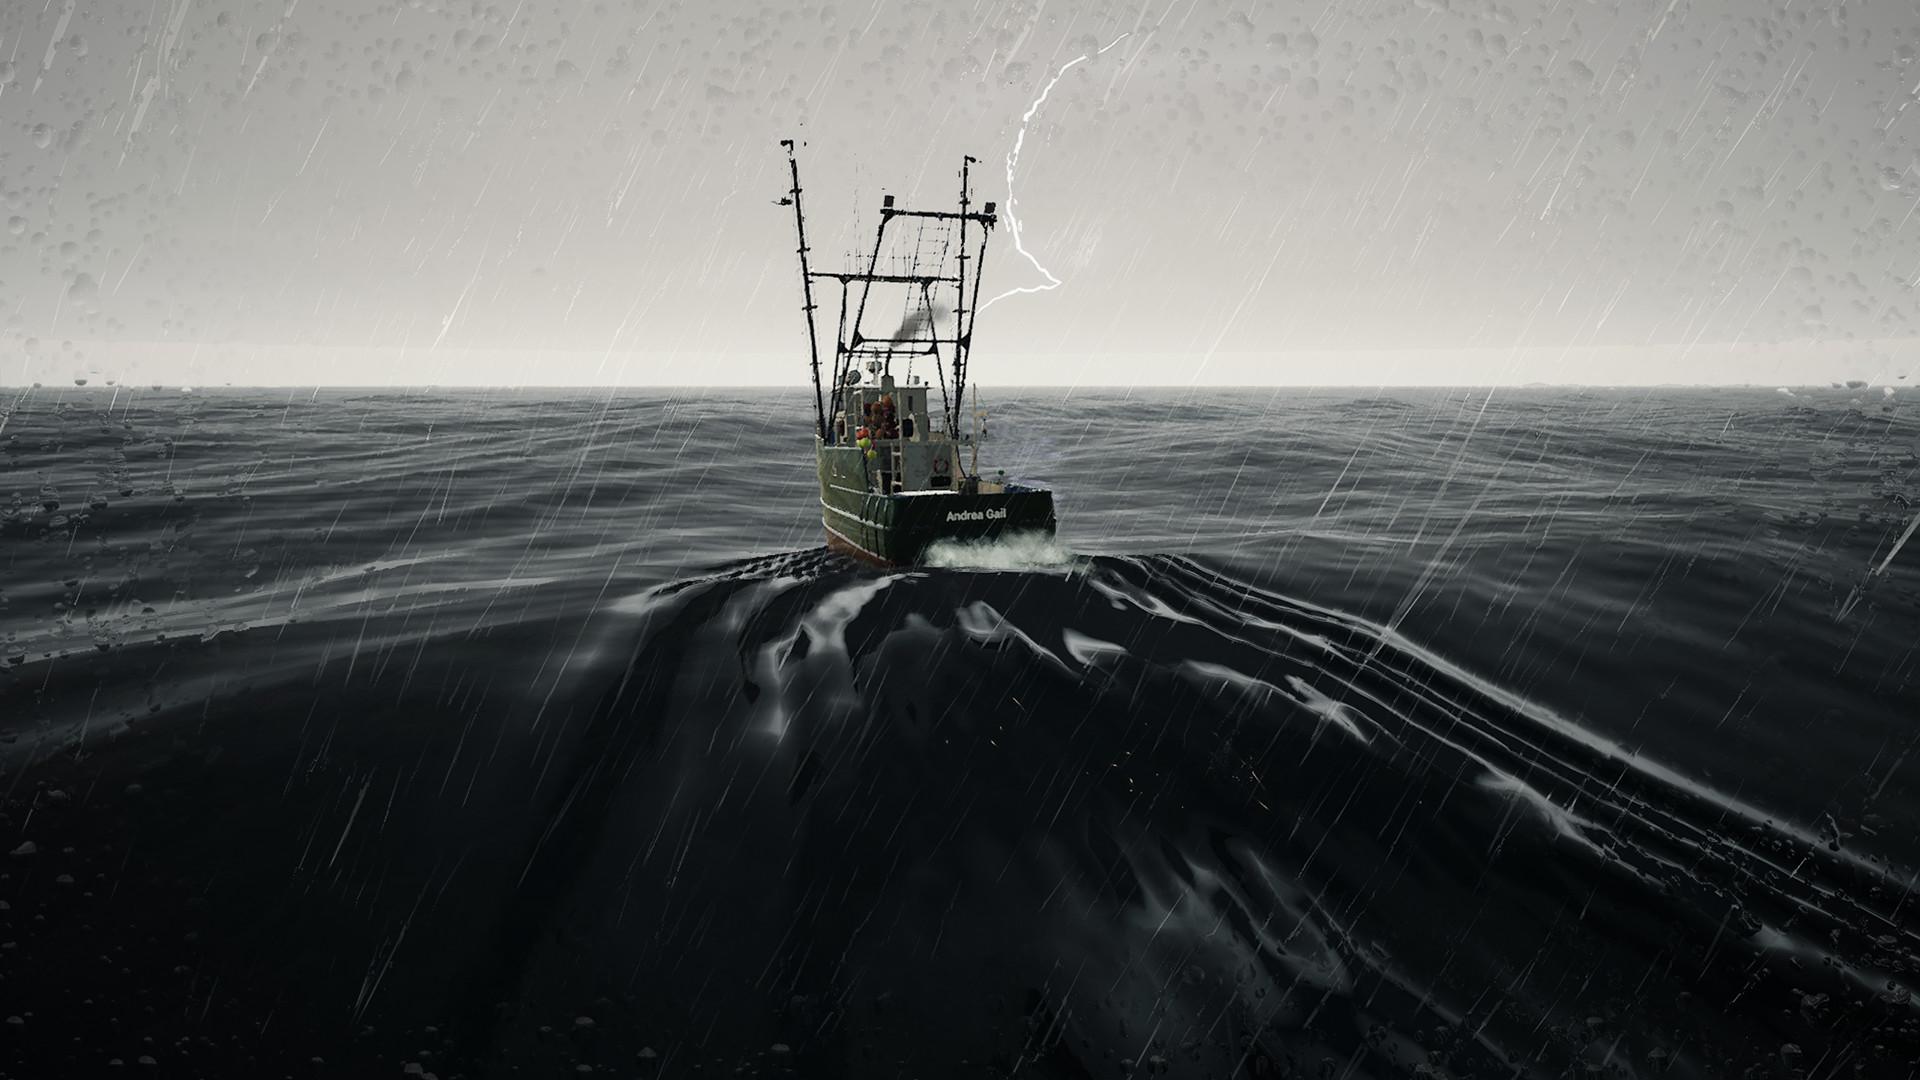 Screenshot №1 from game Fishing: North Atlantic - Enhanced Edition